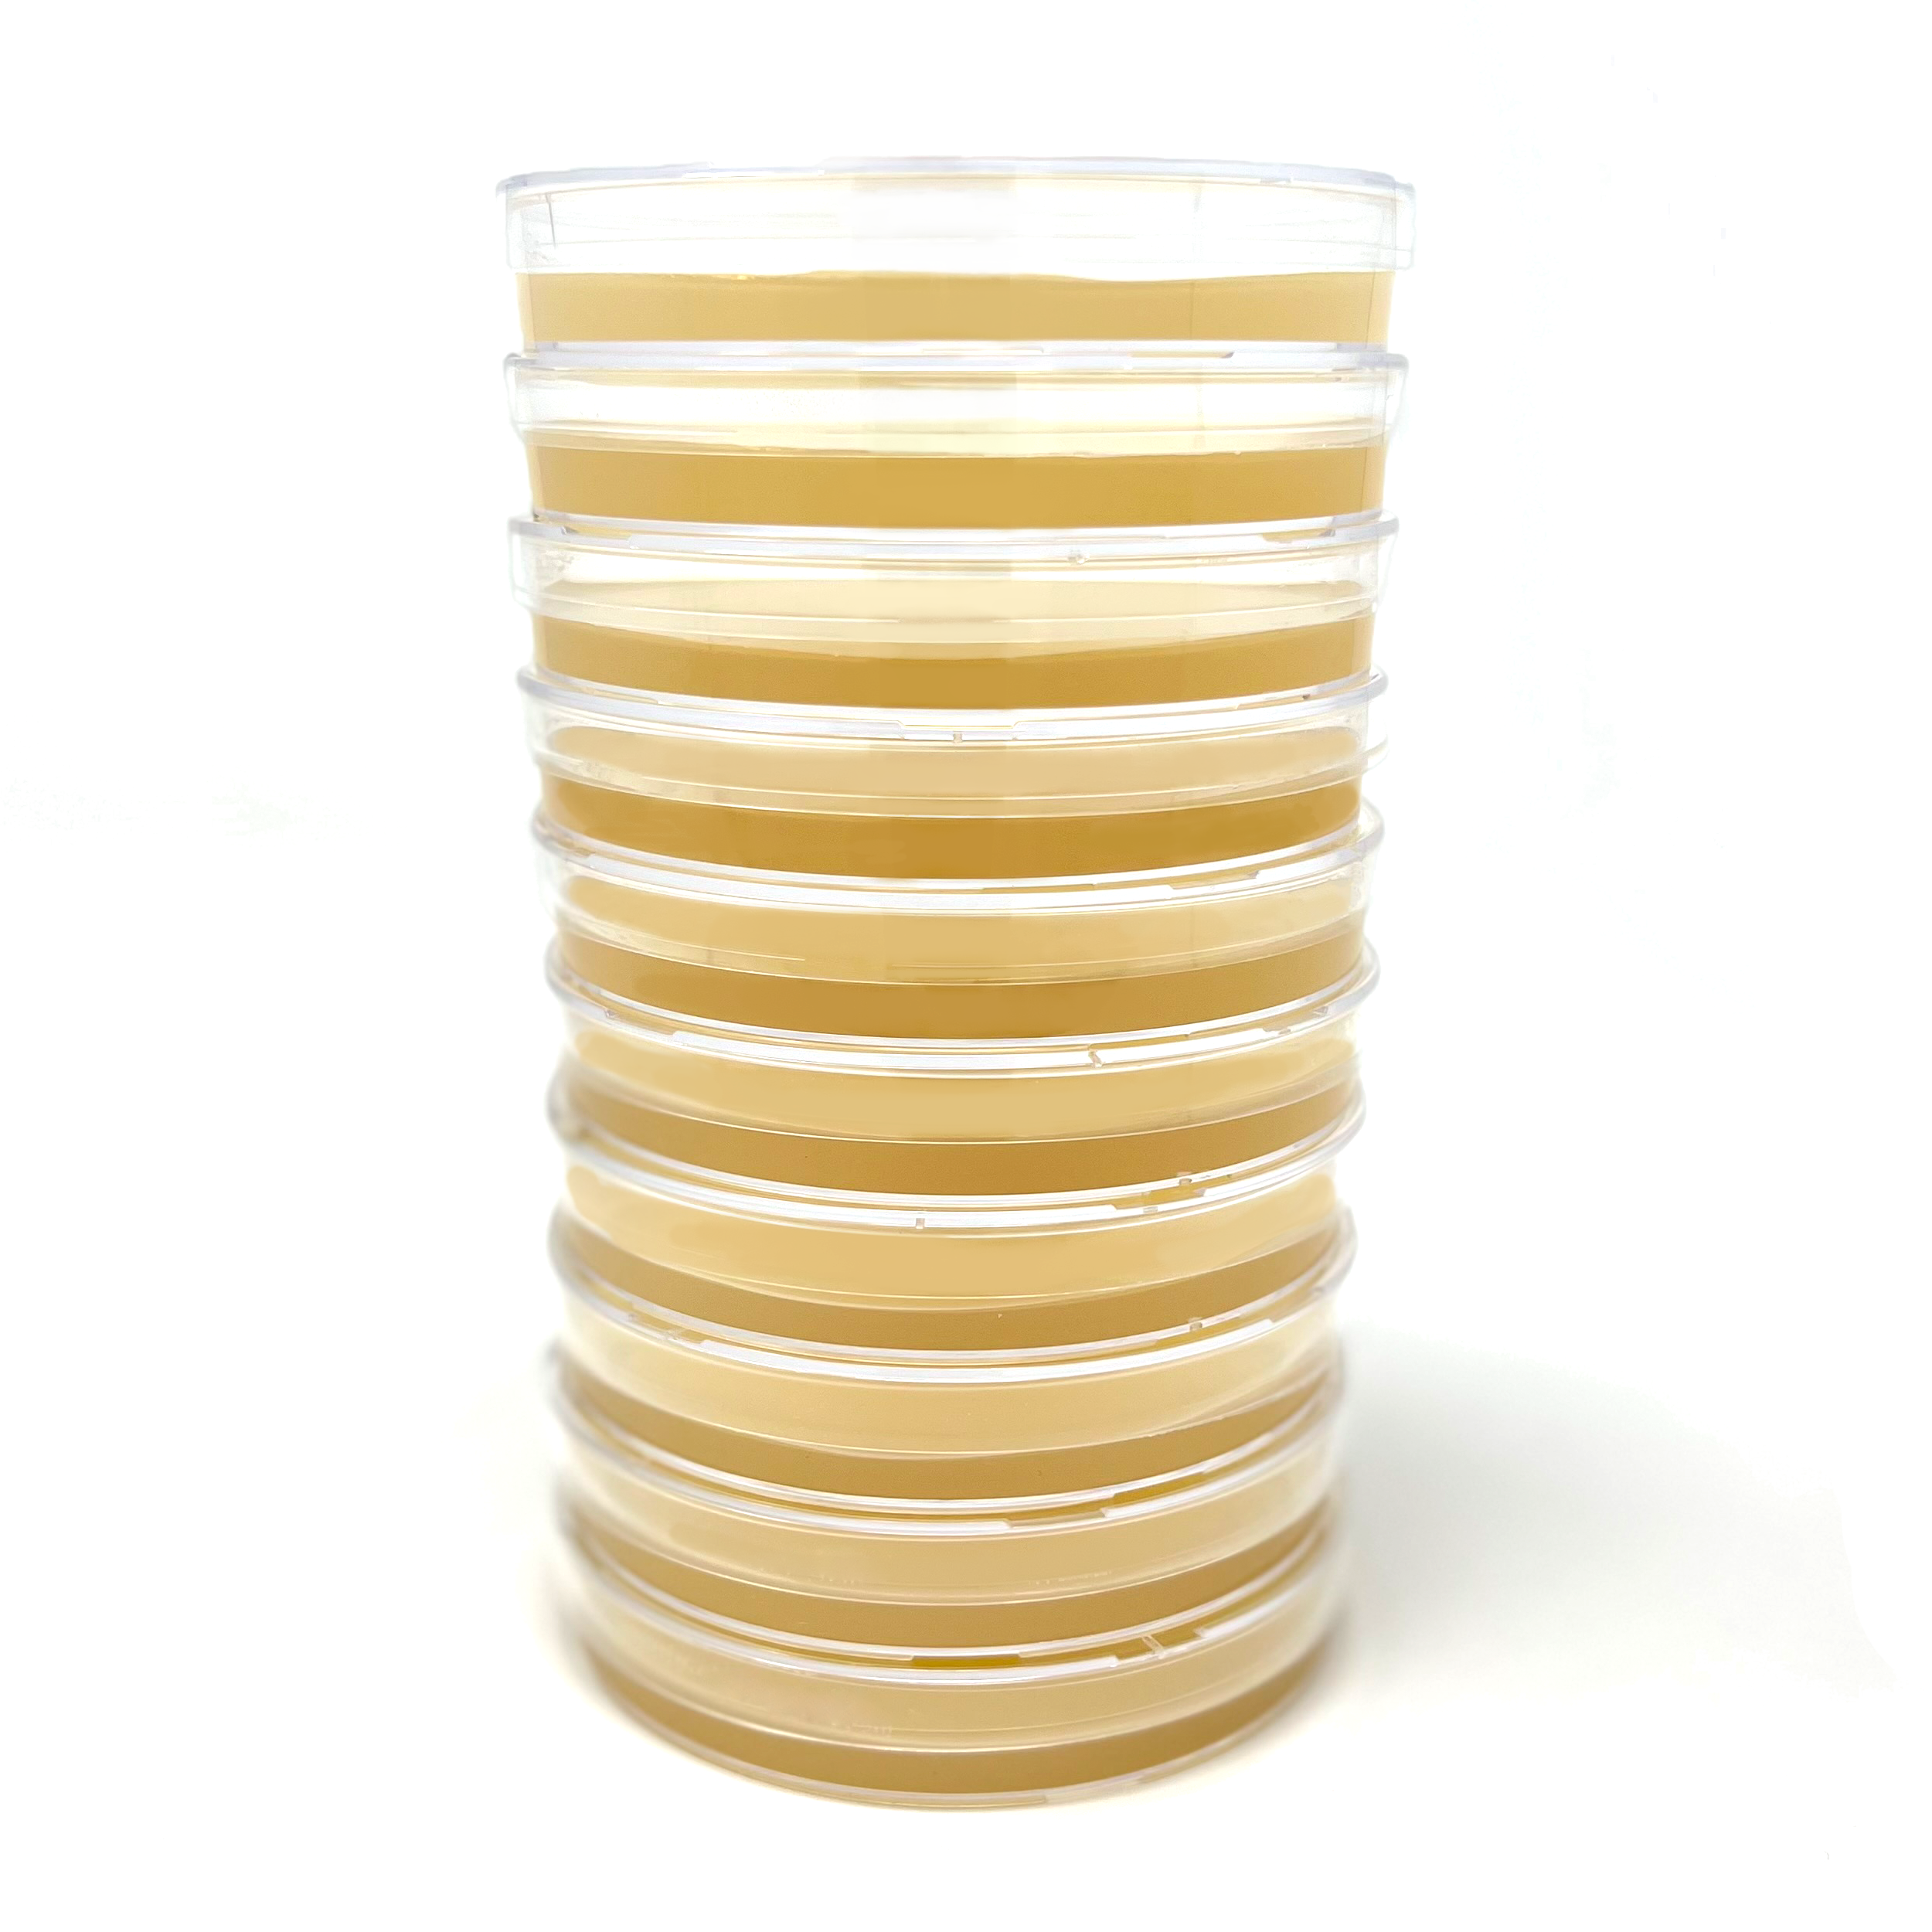 Premium Malt Yeast Extract Agar Plates for Fungal Cultivation - Olympus Myco